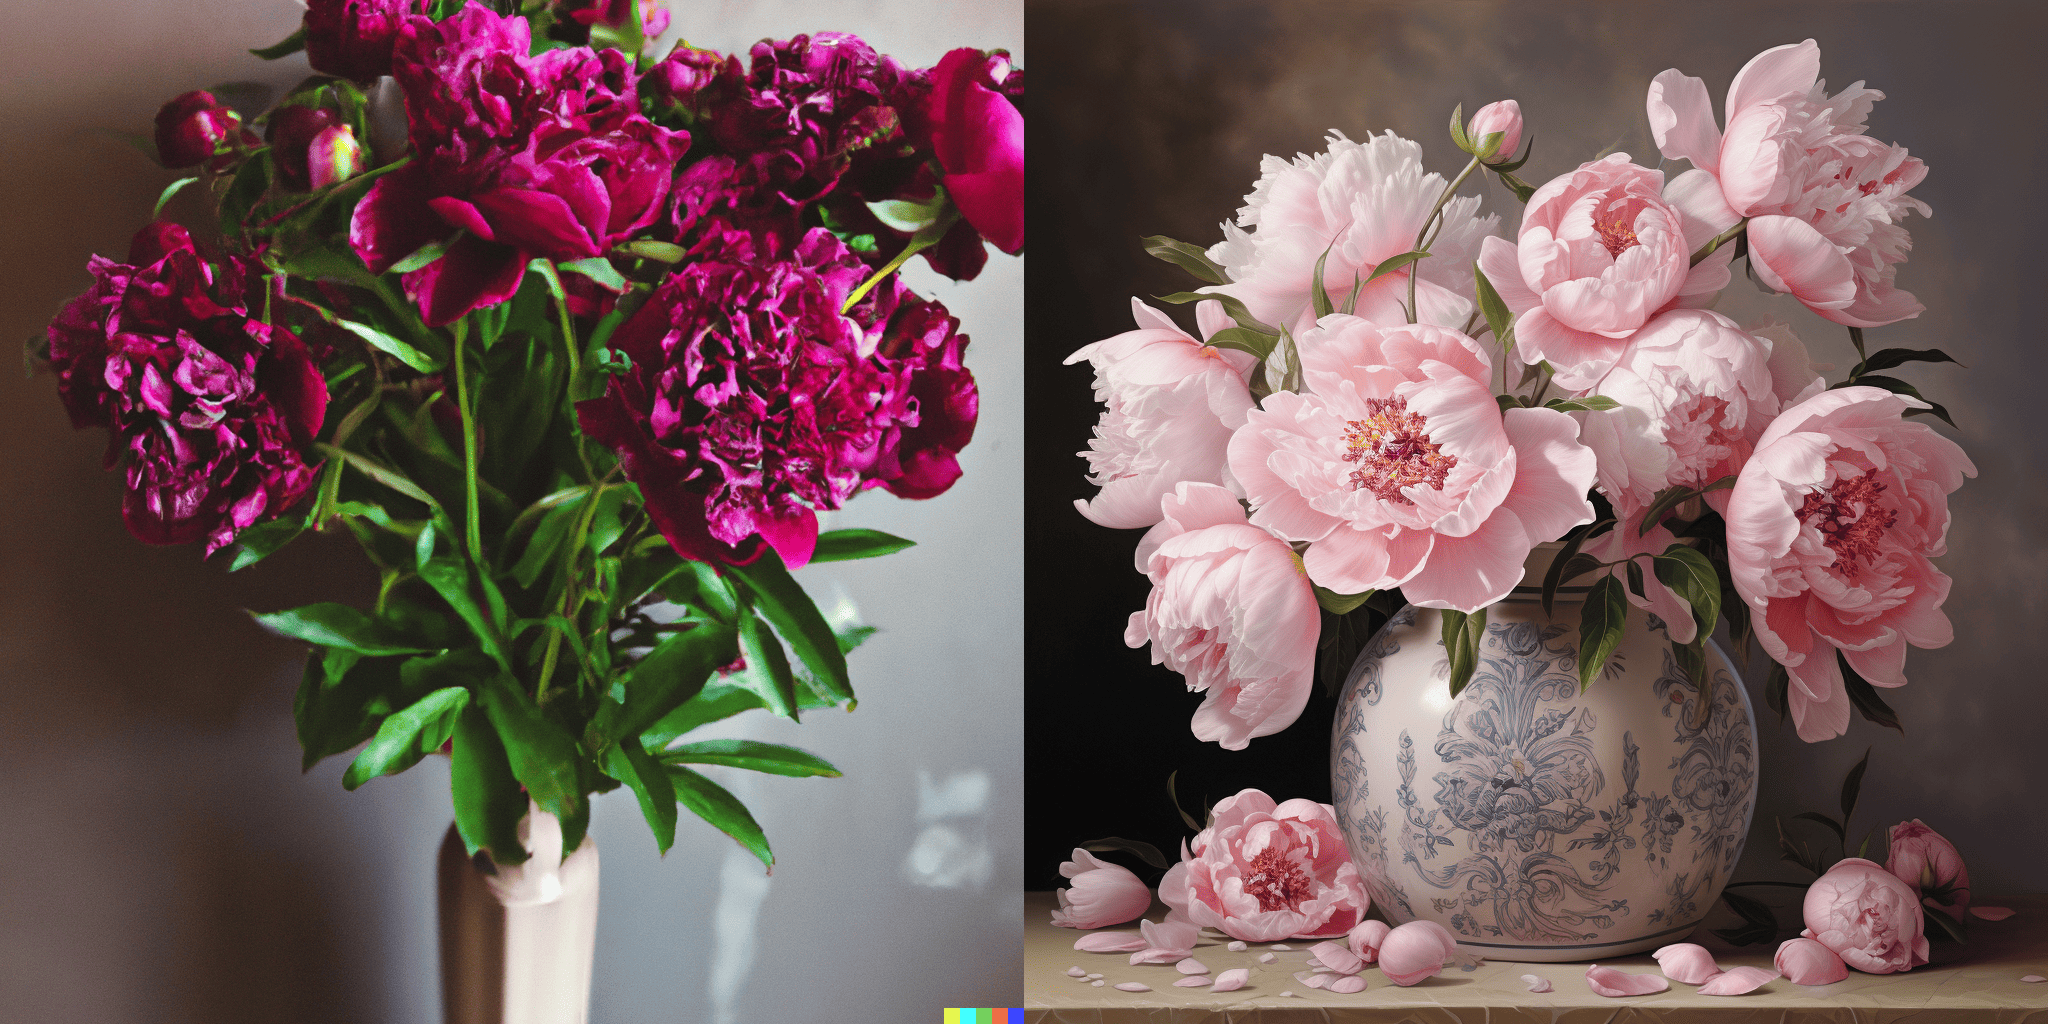 DALL-E 2 vs. Midjourney: Generated image comparison of a flower vase.